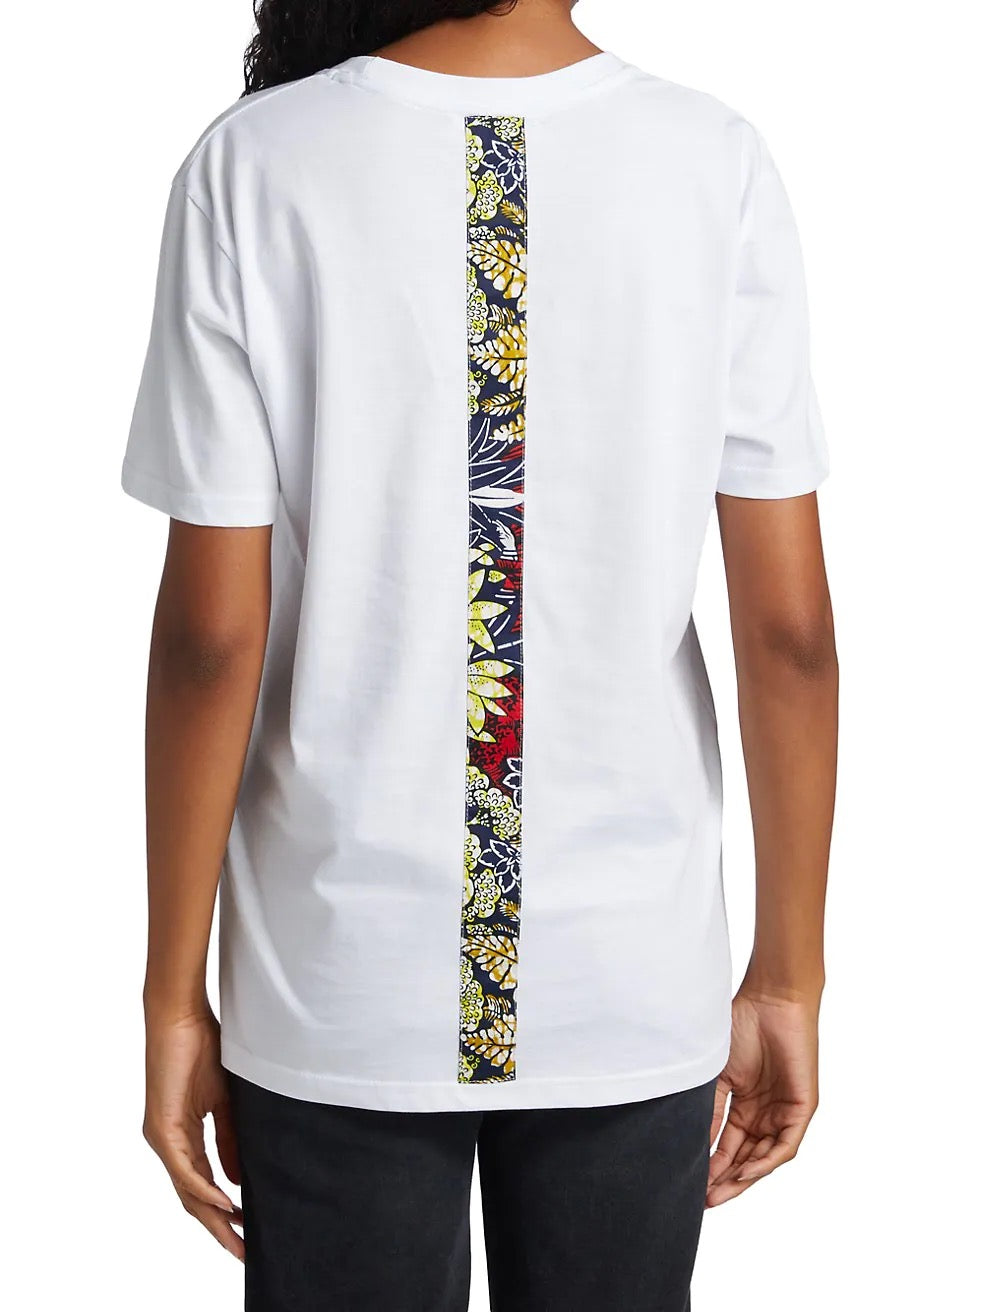 "The" t-shirt blanc 36 RUE FÉLIX x Saks - Bande wax dos - Unisex